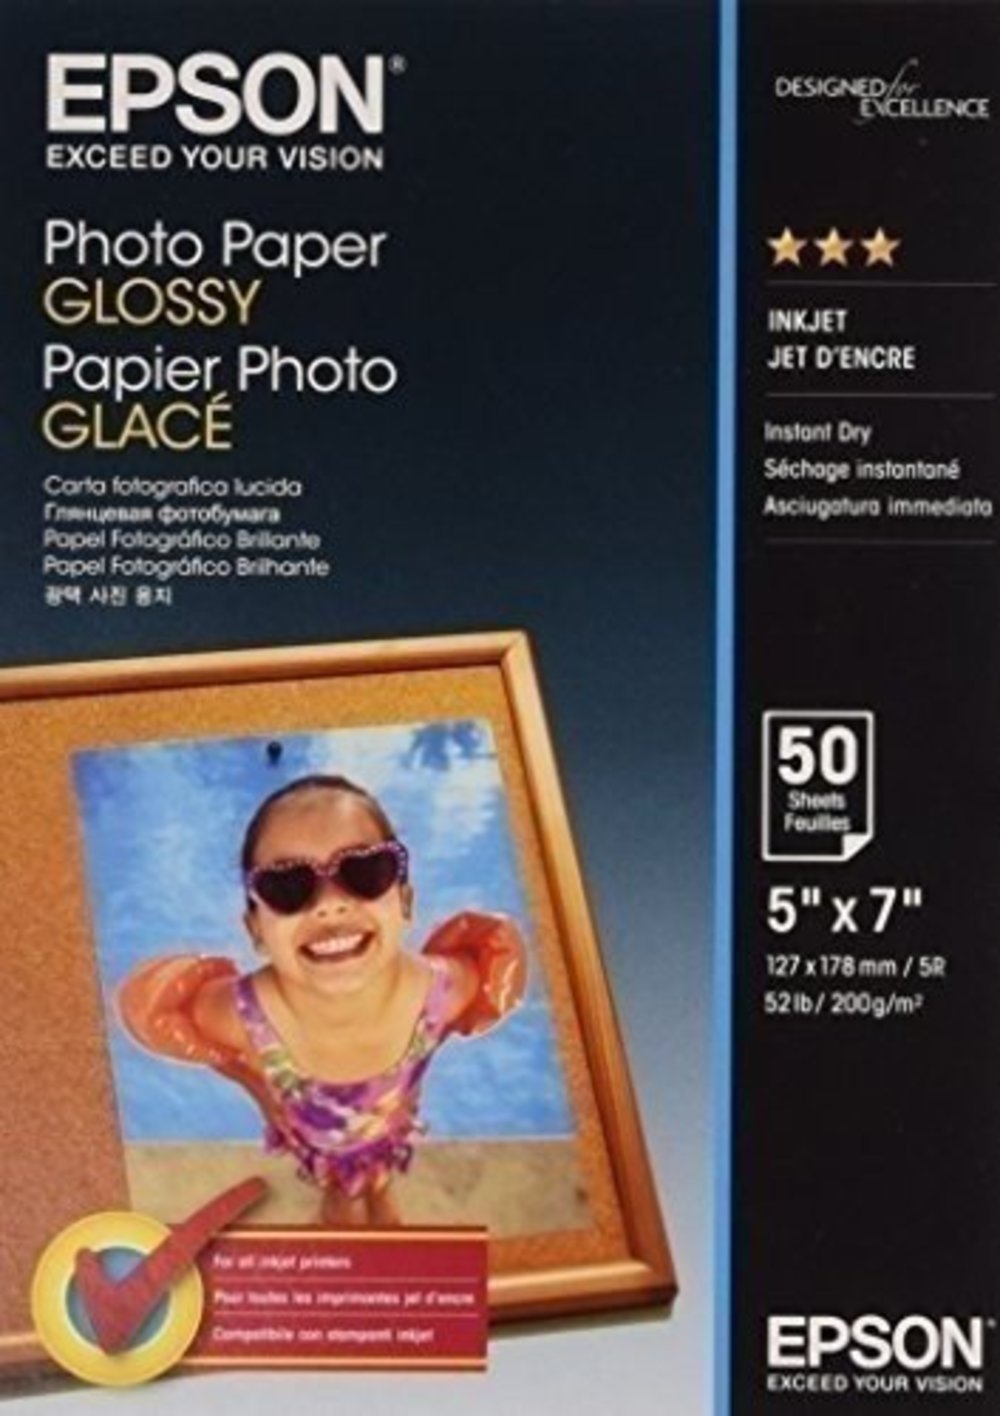 EPSON PHOTO PAPER GLOSSY 